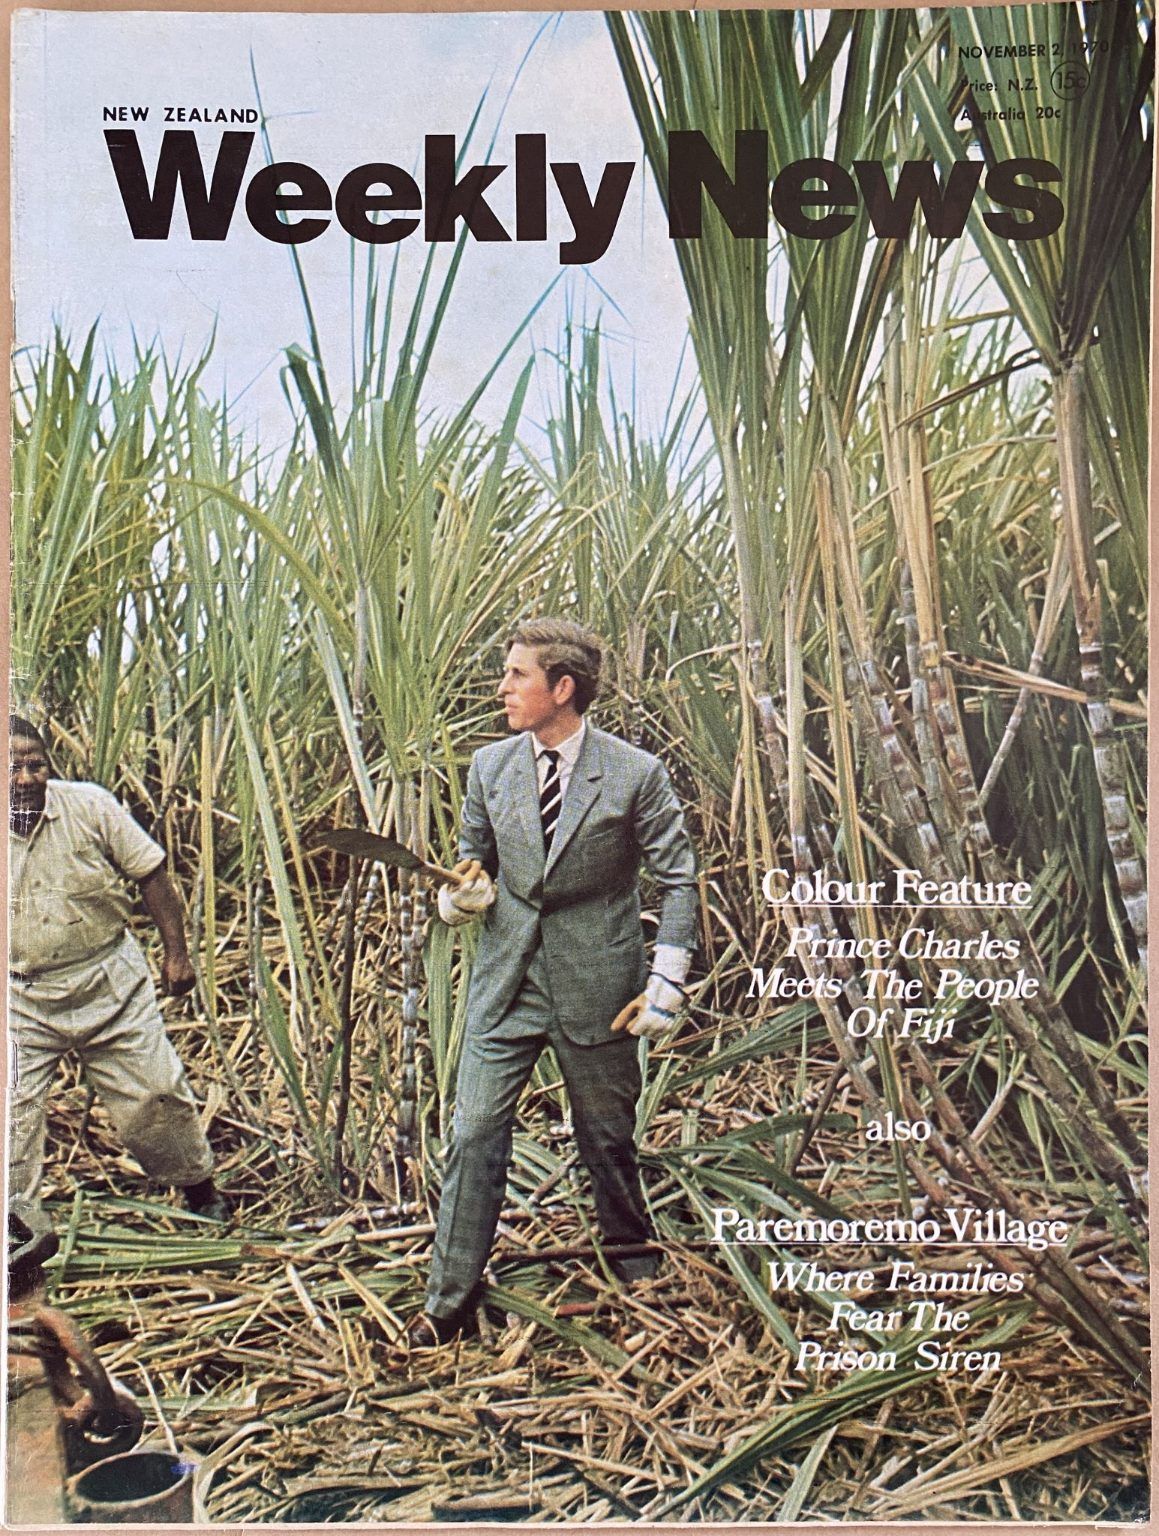 OLD NEWSPAPER: New Zealand Weekly News, No. 5578, 2 November 1970